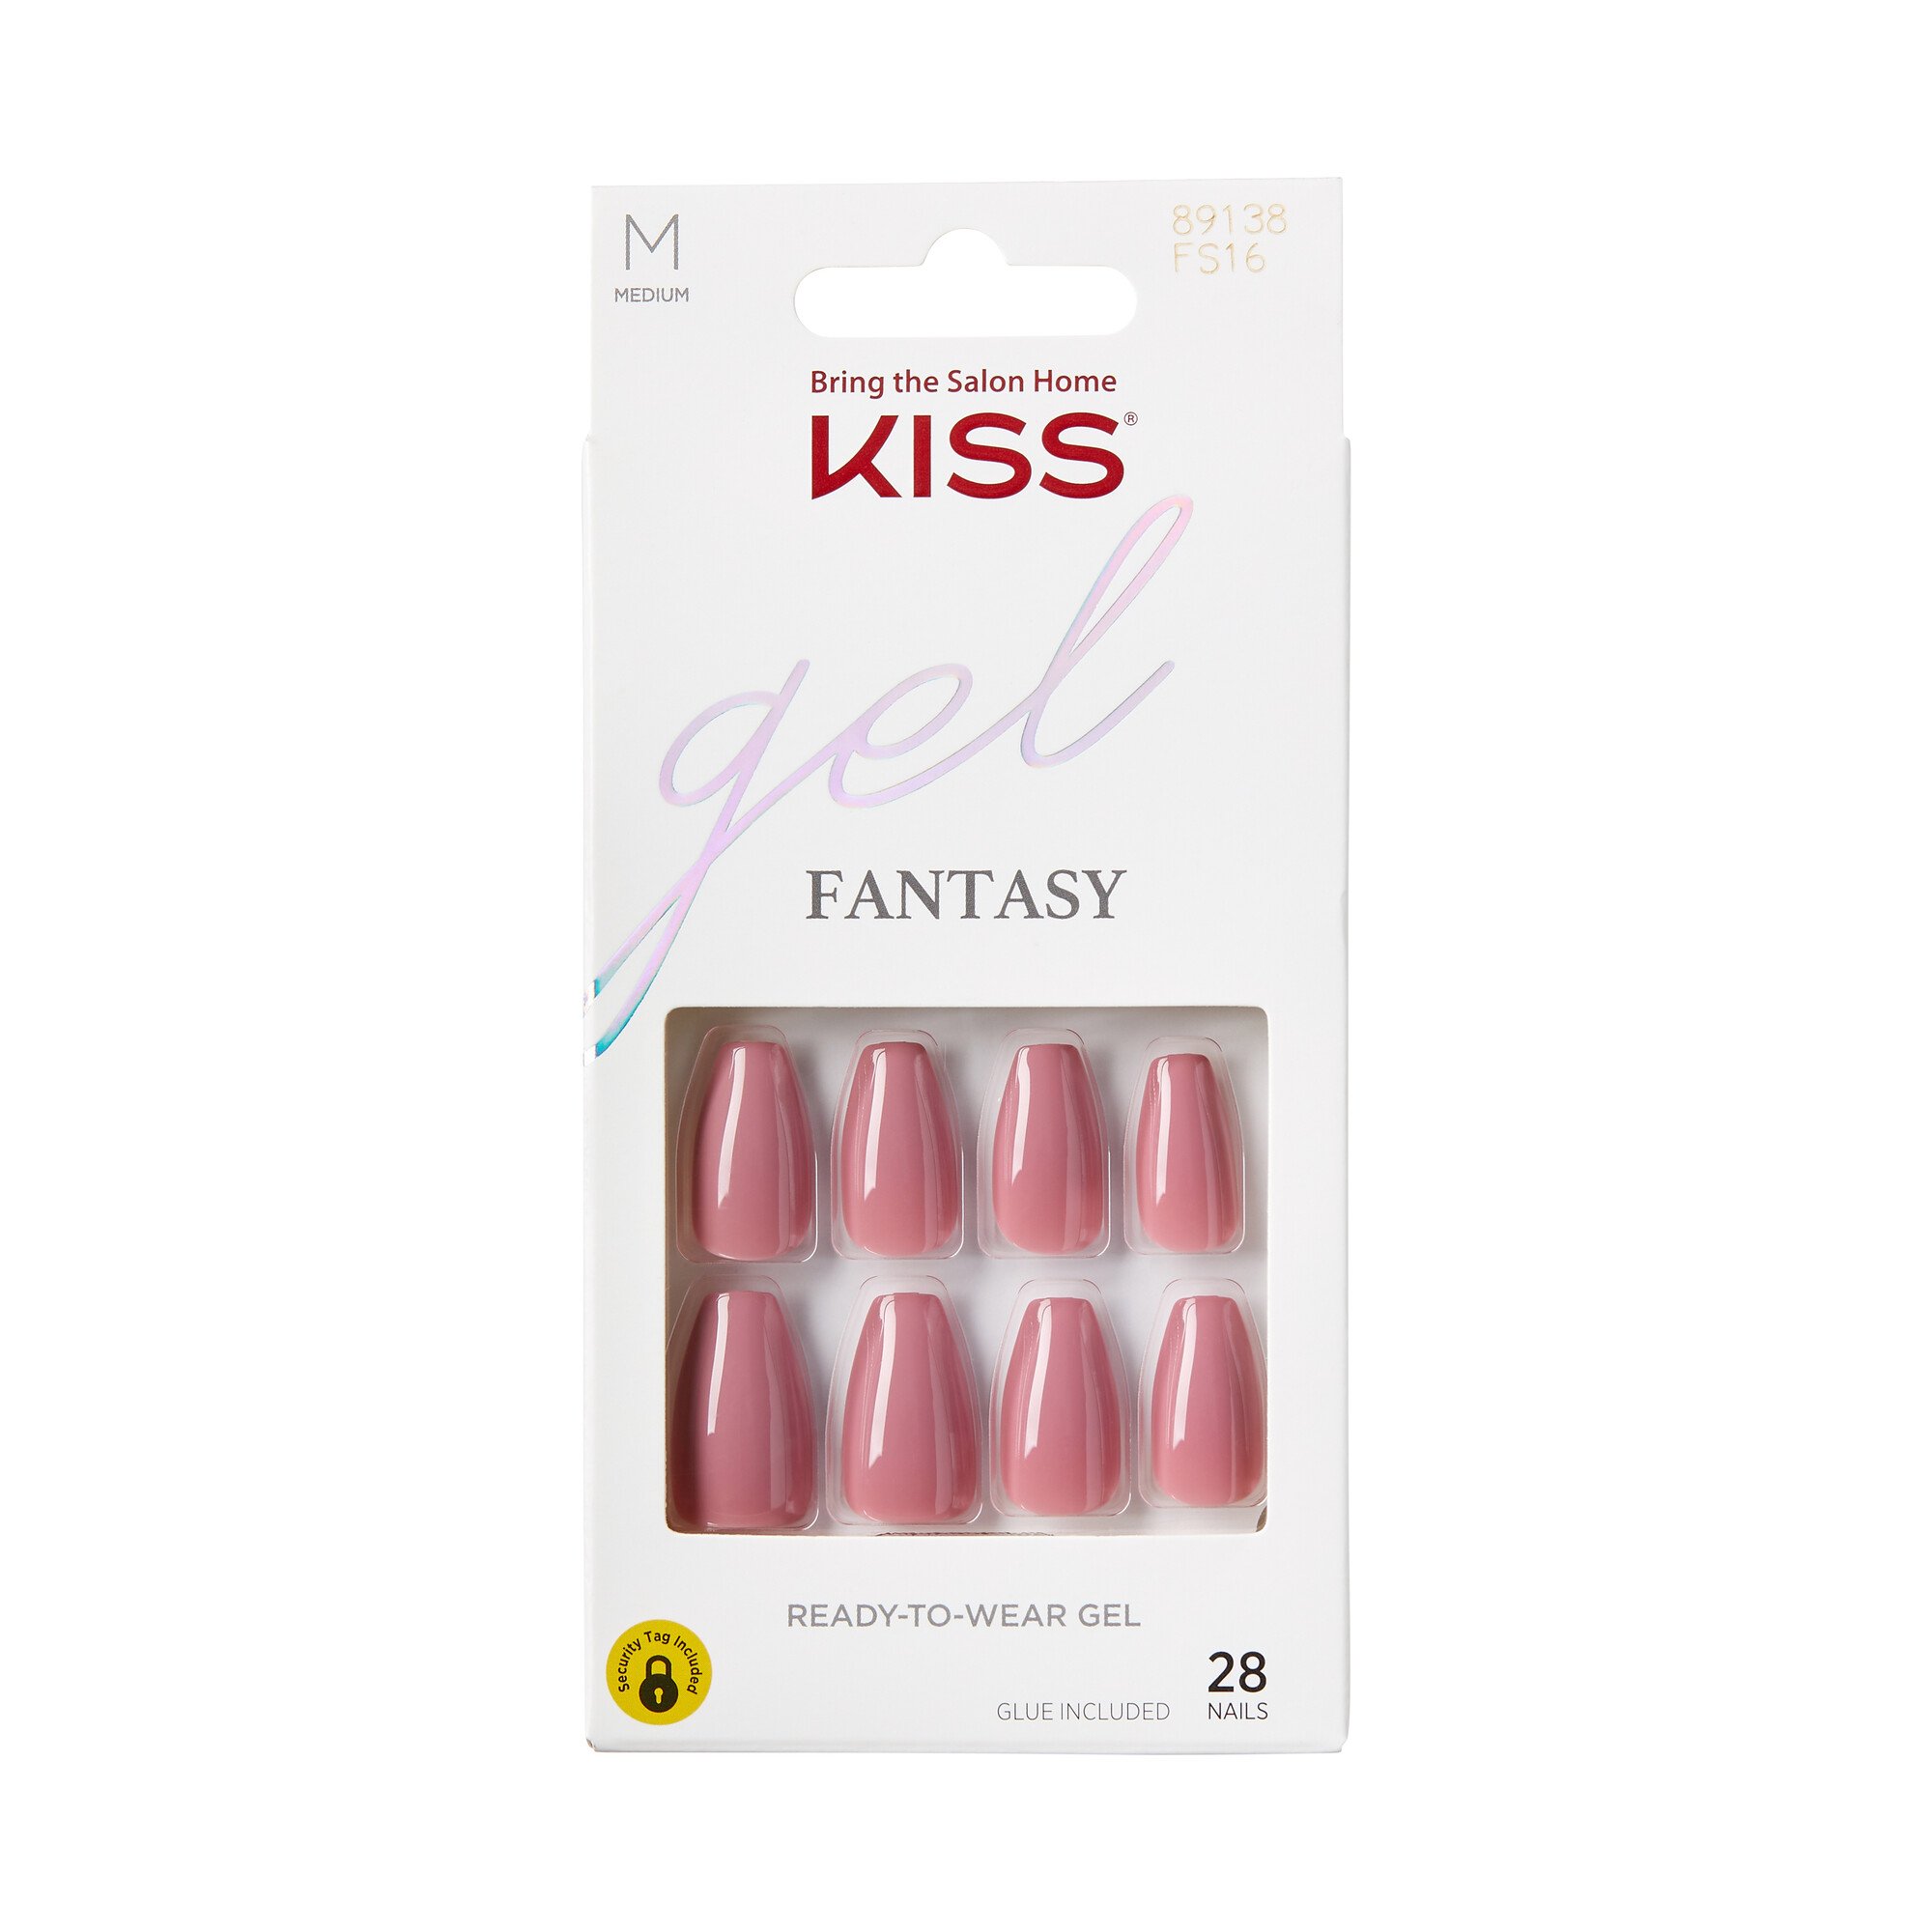 KISS Gel Fantasy Sculpted Nails - Letter to Ur Ex - Shop Nail Sets at H-E-B